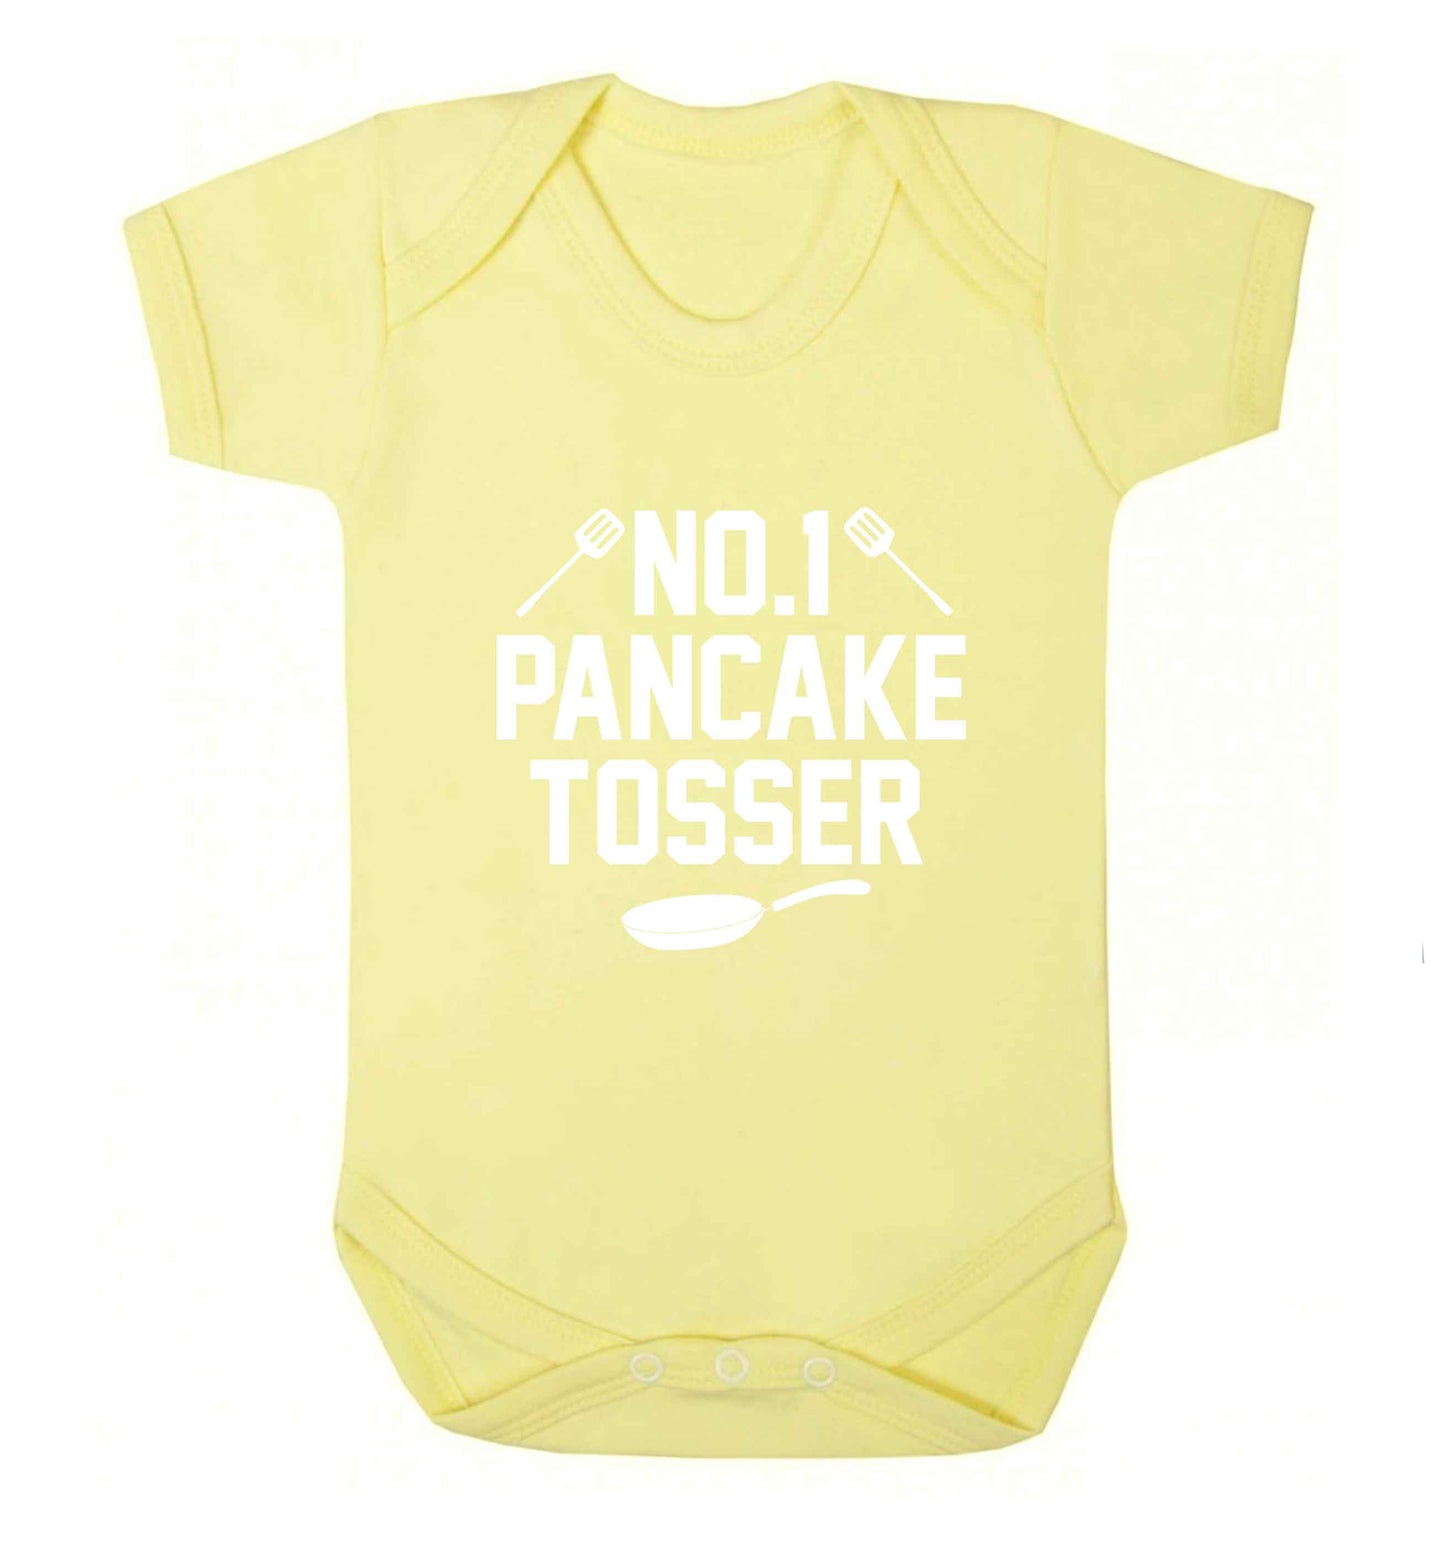 No.1 Pancake tosser baby vest pale yellow 18-24 months